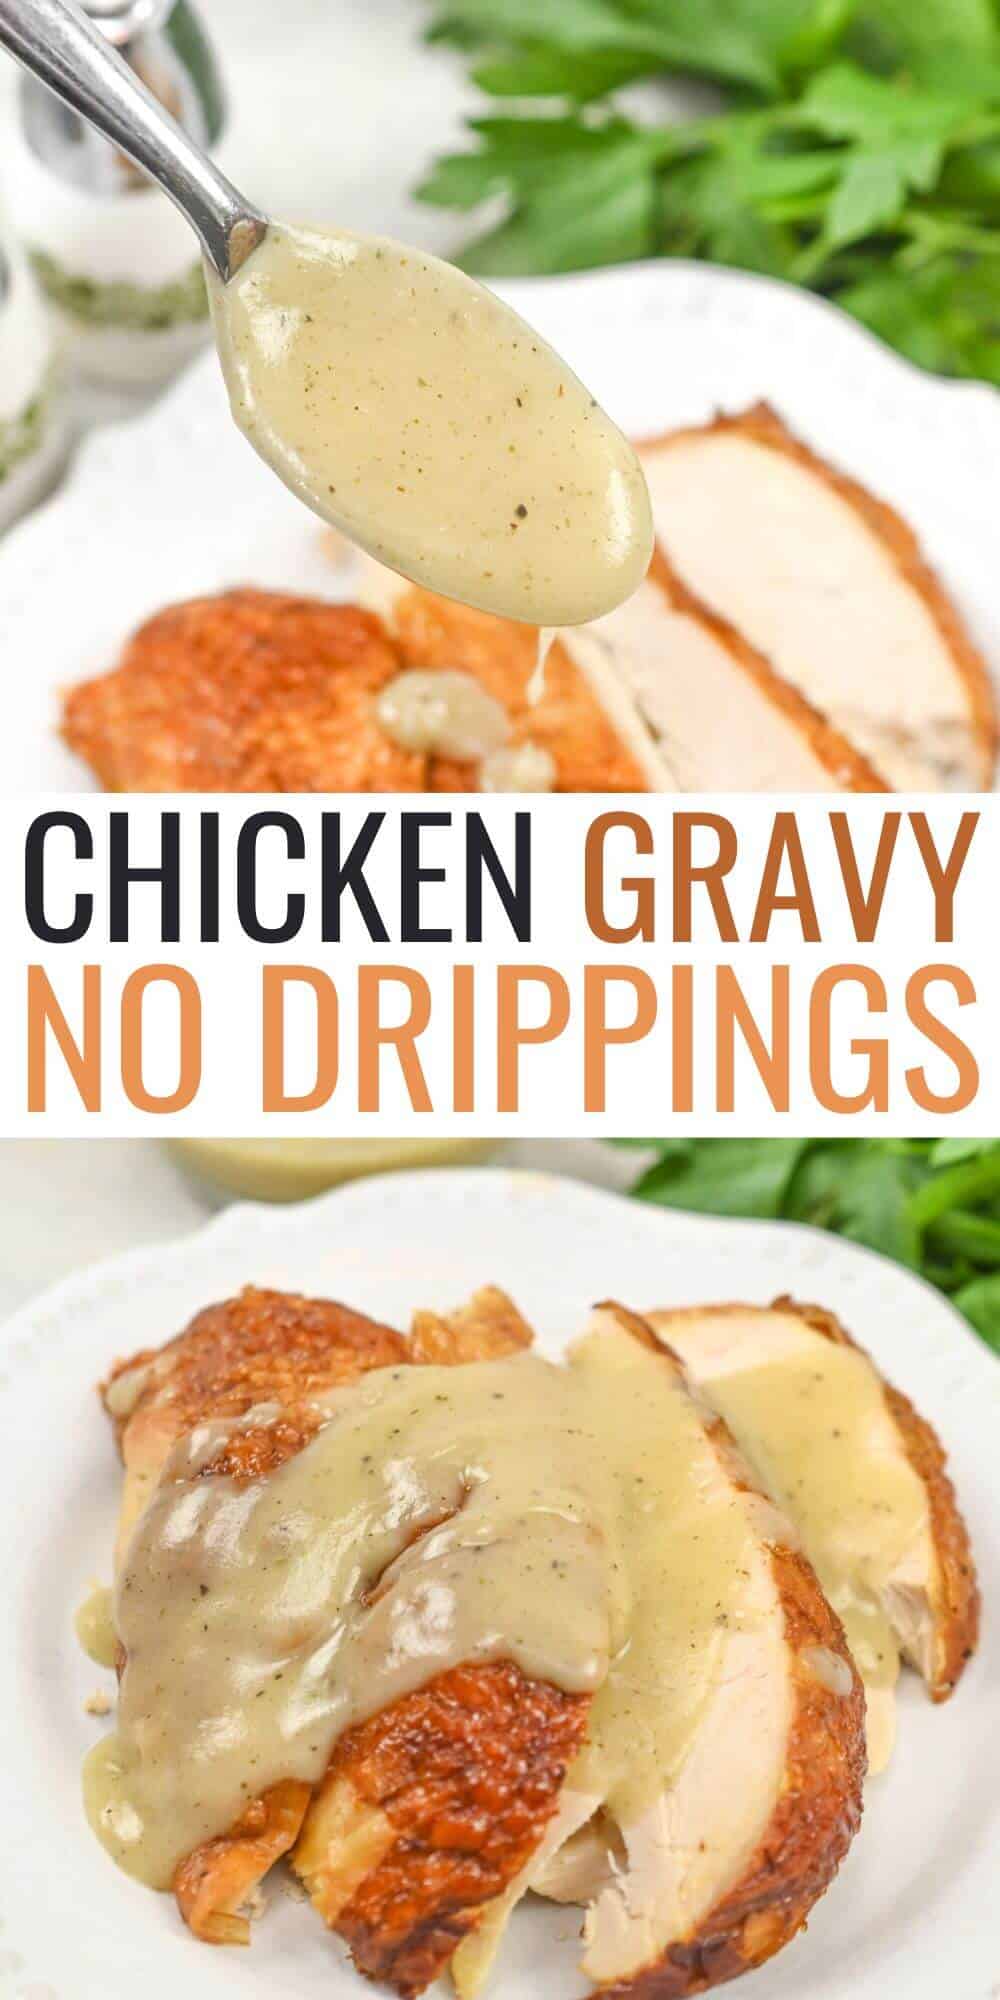 Chicken gravy no dipping recipe.